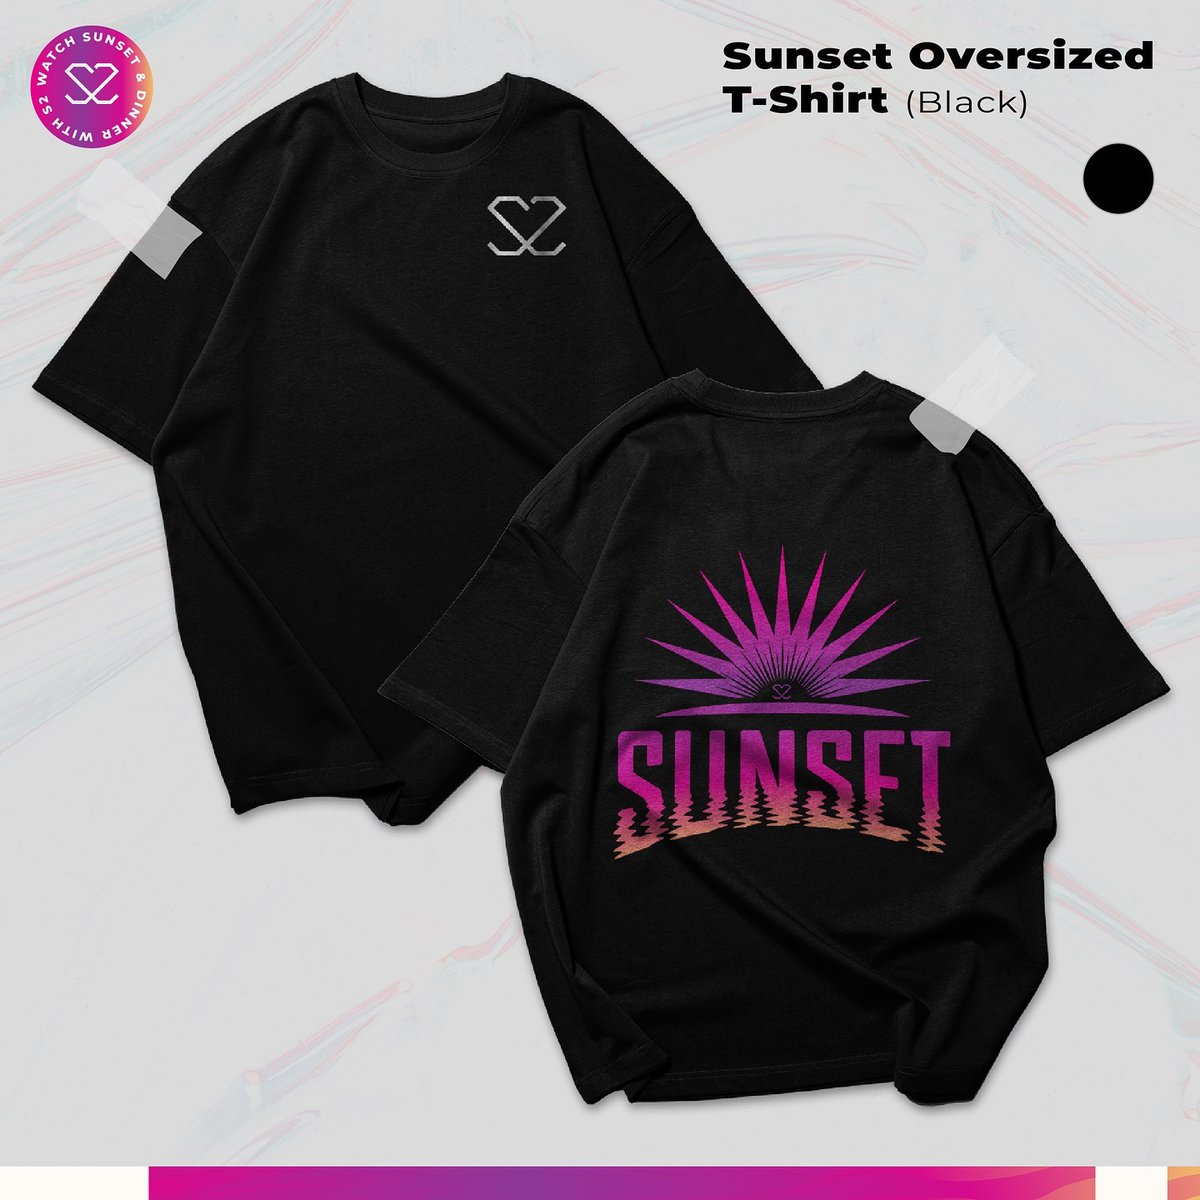 Sunset Oversized T-shirt (Black)

Pre-Order S2-SOS Collection 
3 June 2024
6:05 PM
BUY to LINE Shopping: @ nnrtshop
🛒 shop.line.me/@nnrtshop

สามารถสั่งซื้อได้ถึง 30 มิถุนายน 2567 เลย

#S2TheSunset 
#NoeulNuttarat 
#MagentaBoy #BoNoh